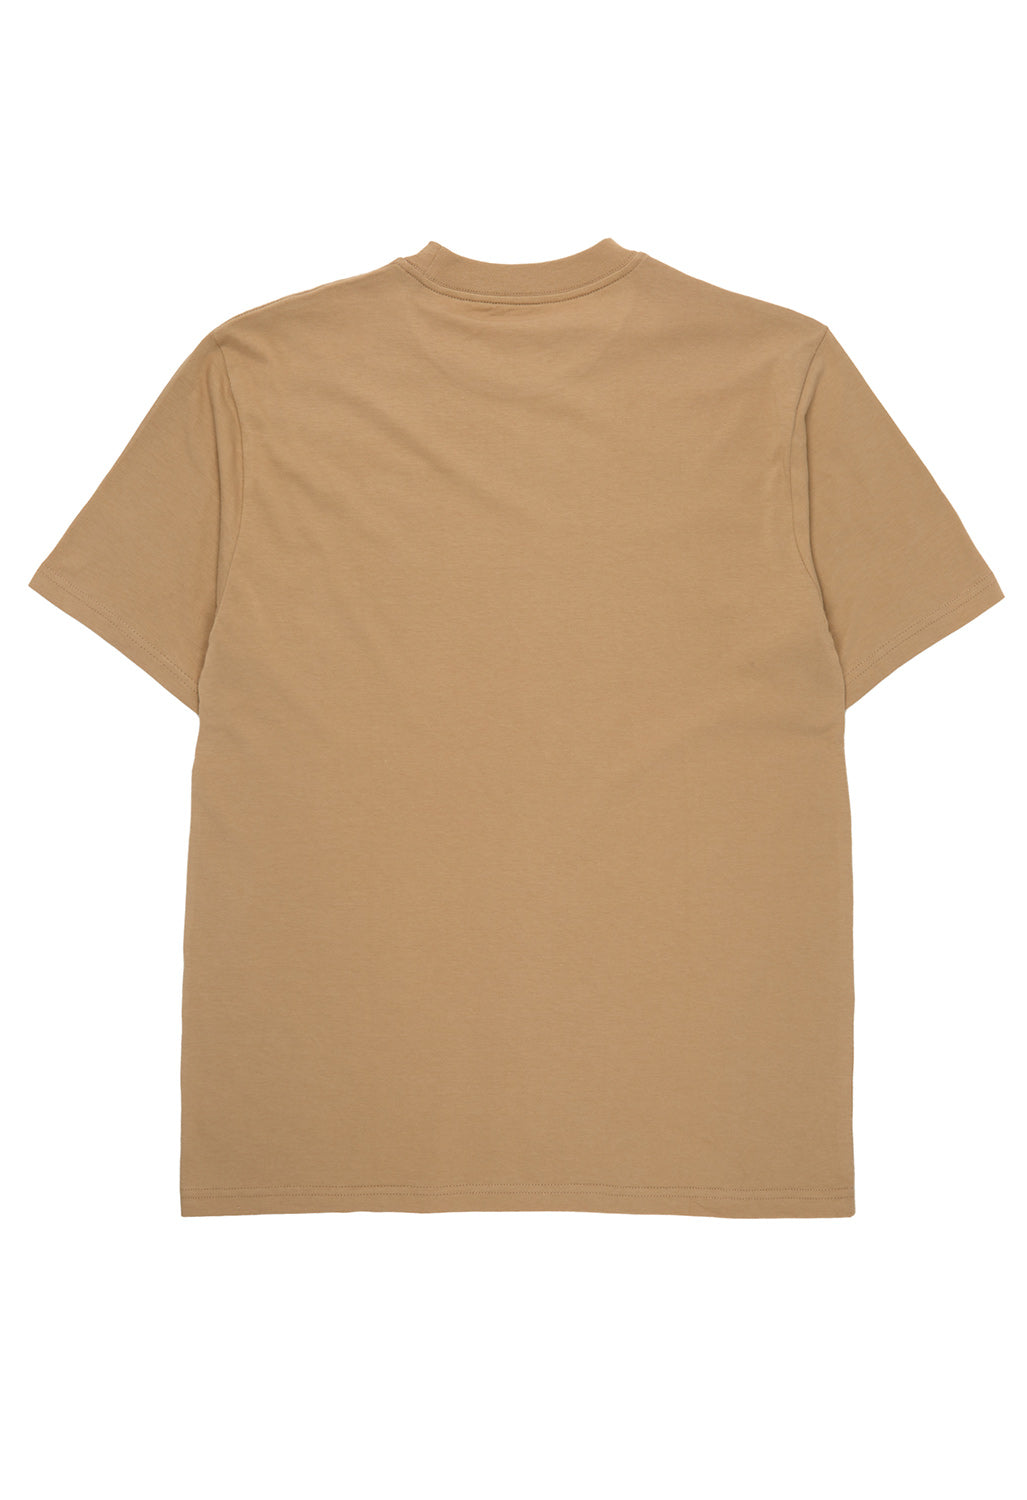 Carhartt WIP Men's Palette T-Shirt - Sable